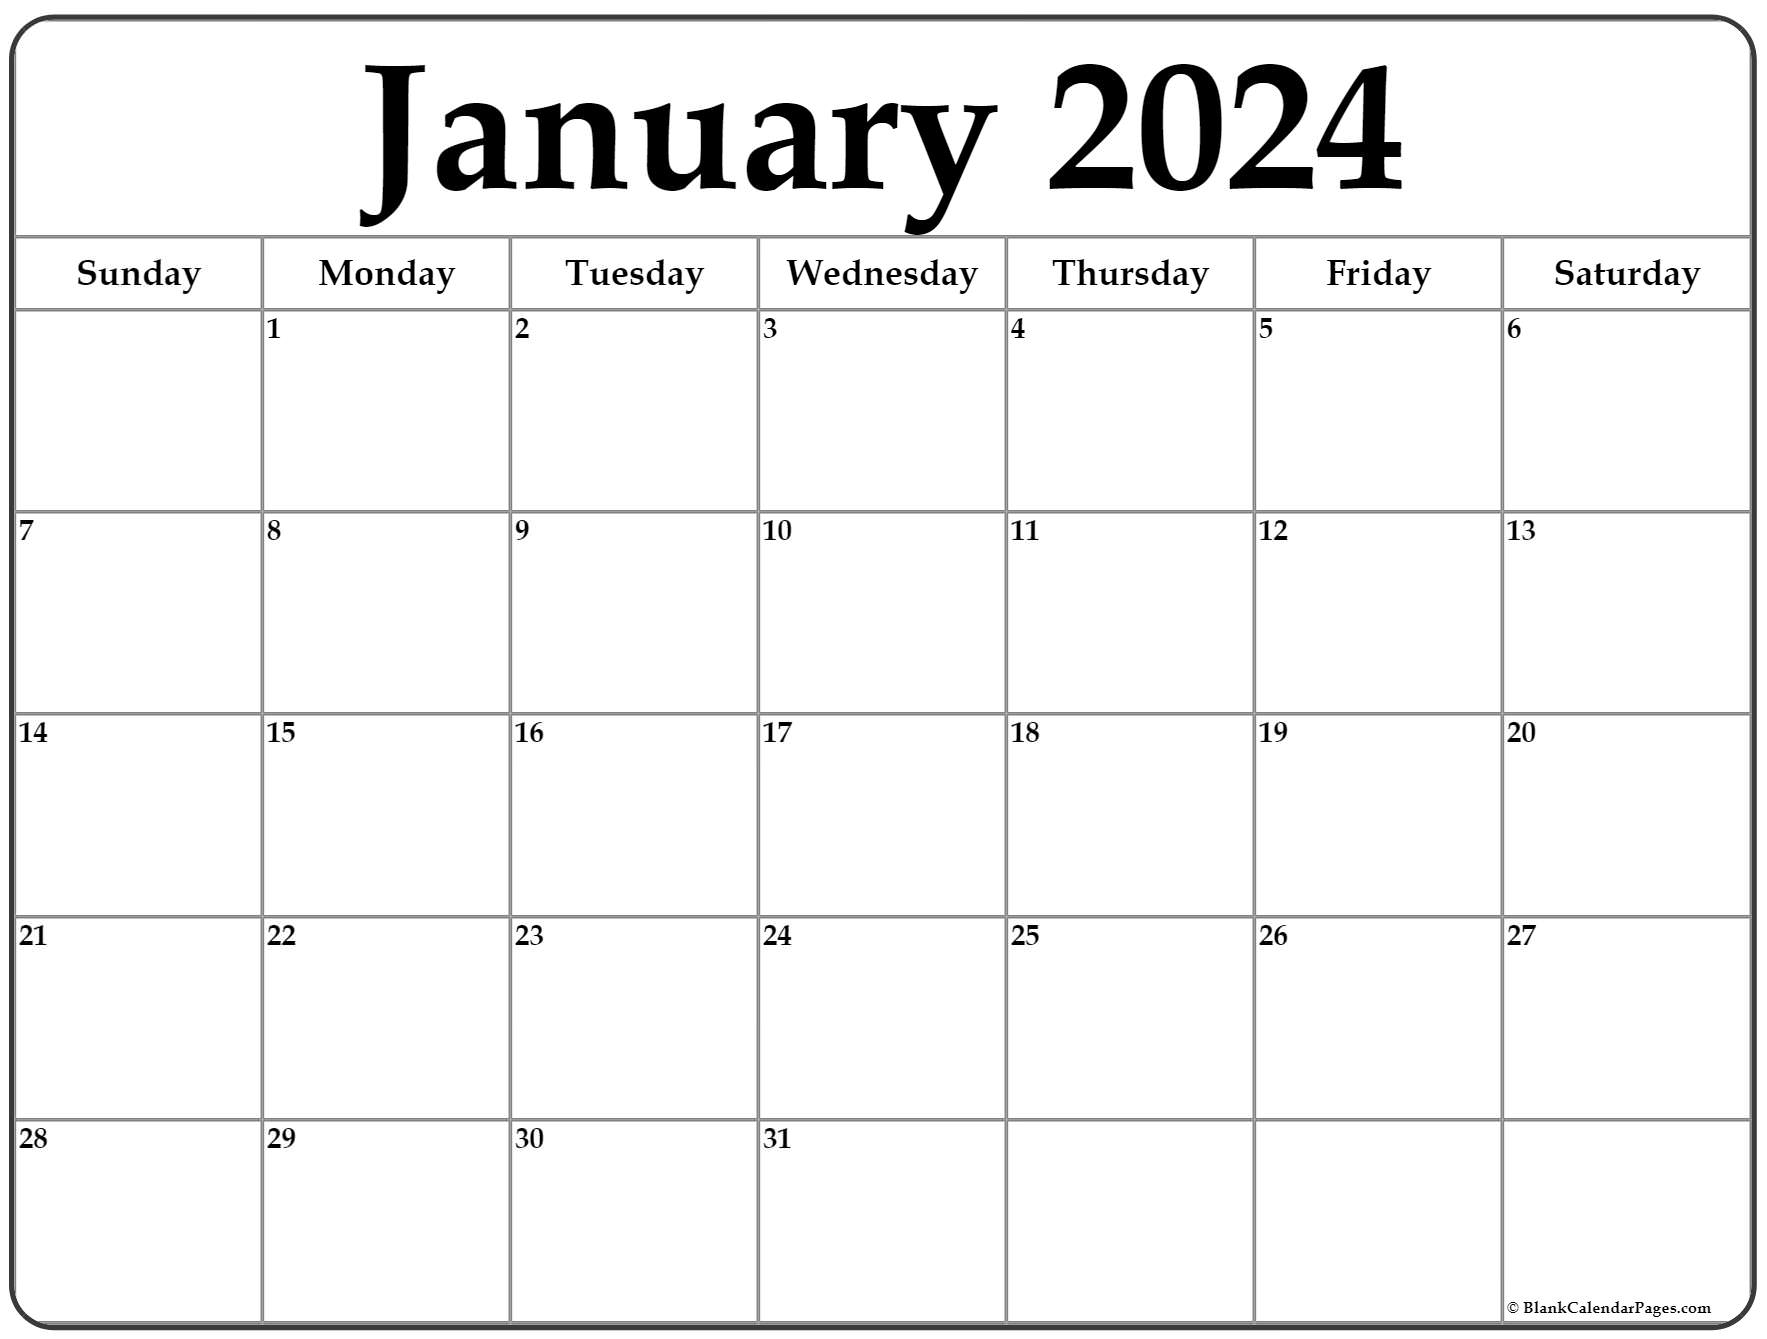 January 2024 Calendar | Free Printable Calendar for Free Printable Calendar 2024 Template